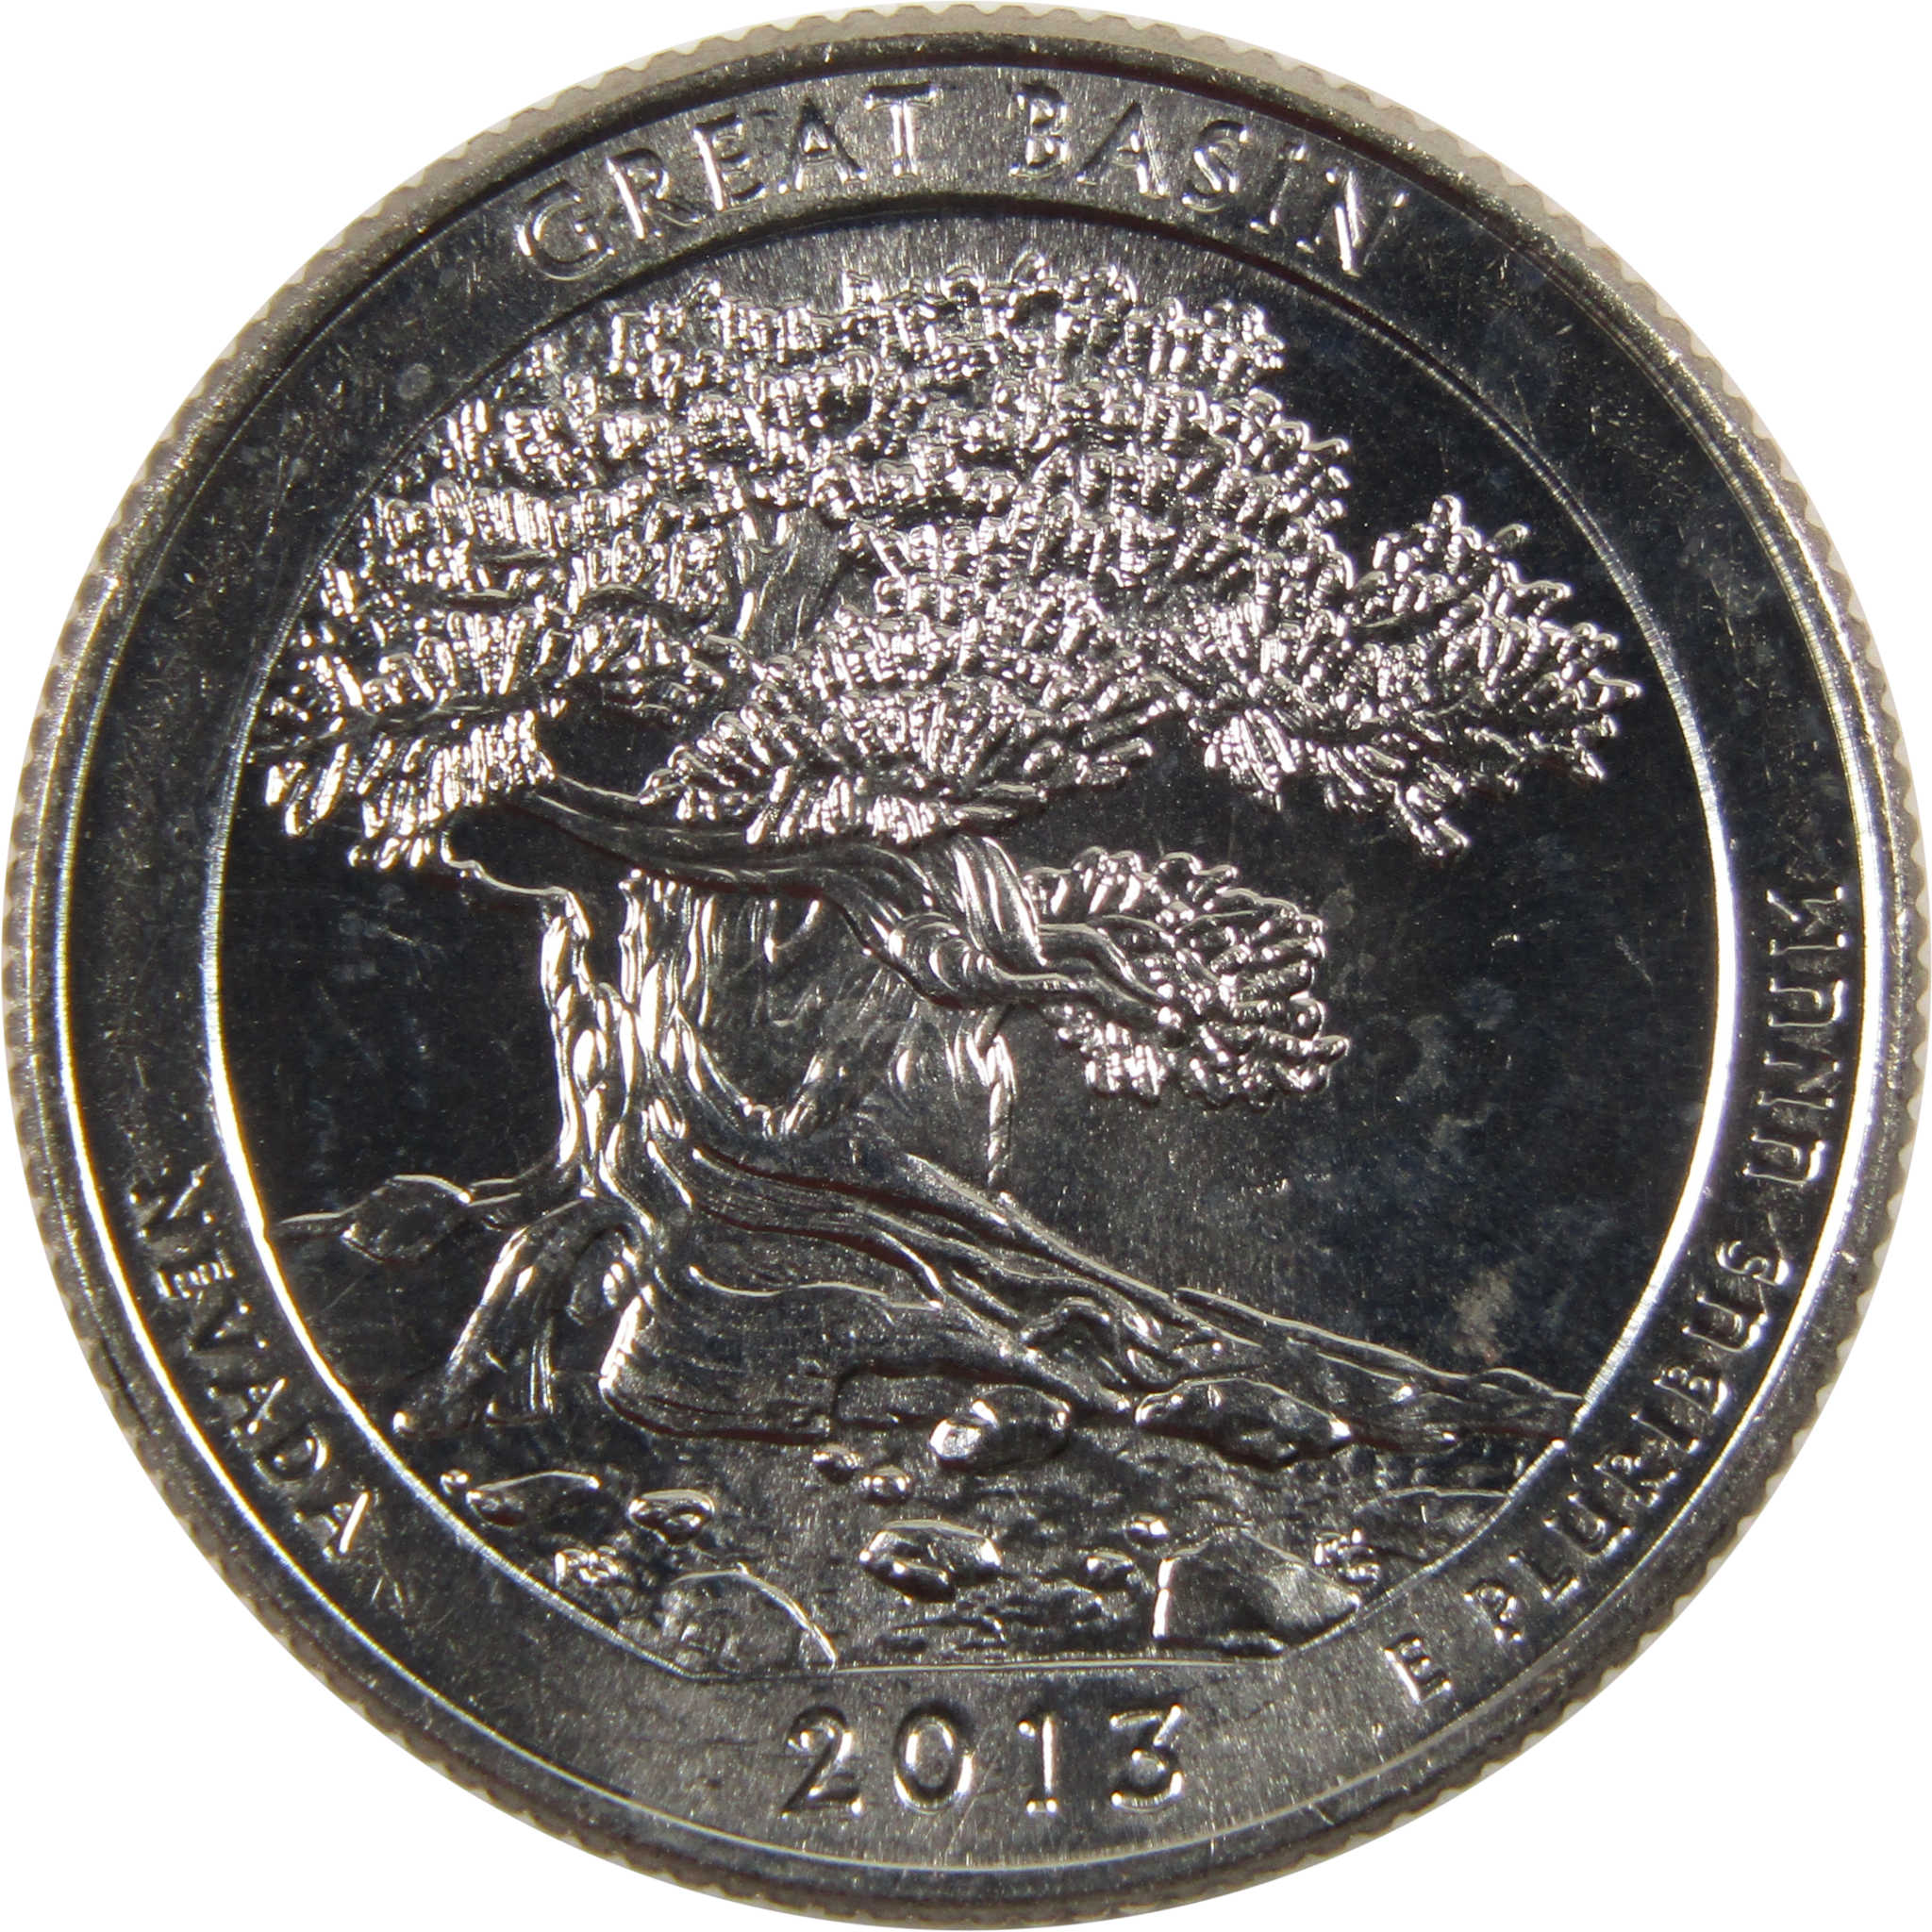 2013 D Great Basin National Park Quarter BU Uncirculated Clad 25c Coin